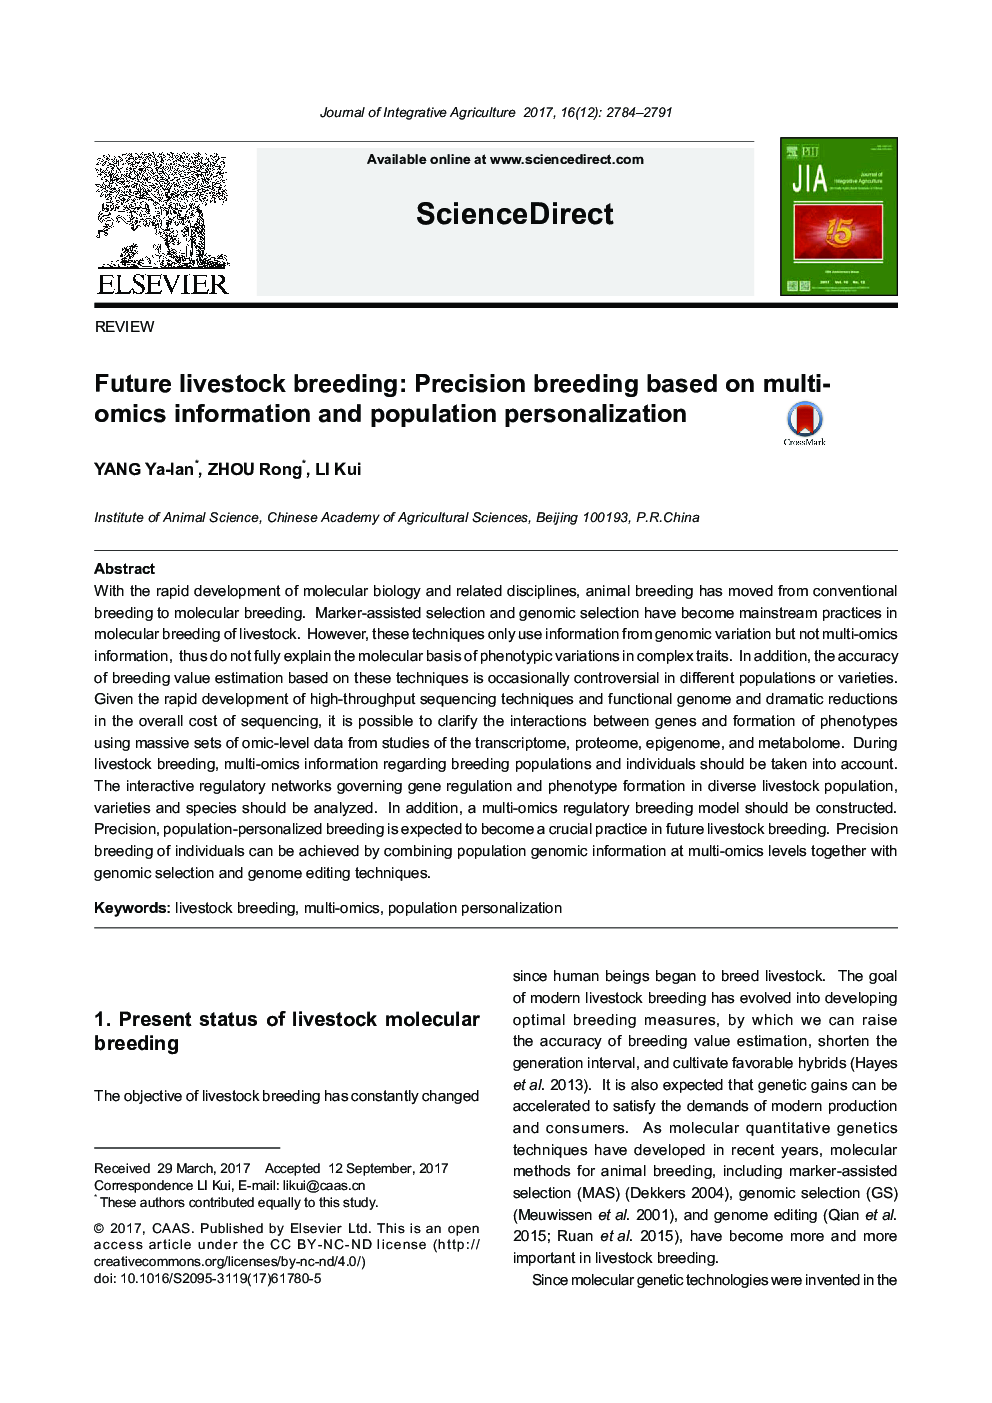 Future livestock breeding: Precision breeding based on multi-omics information and population personalization